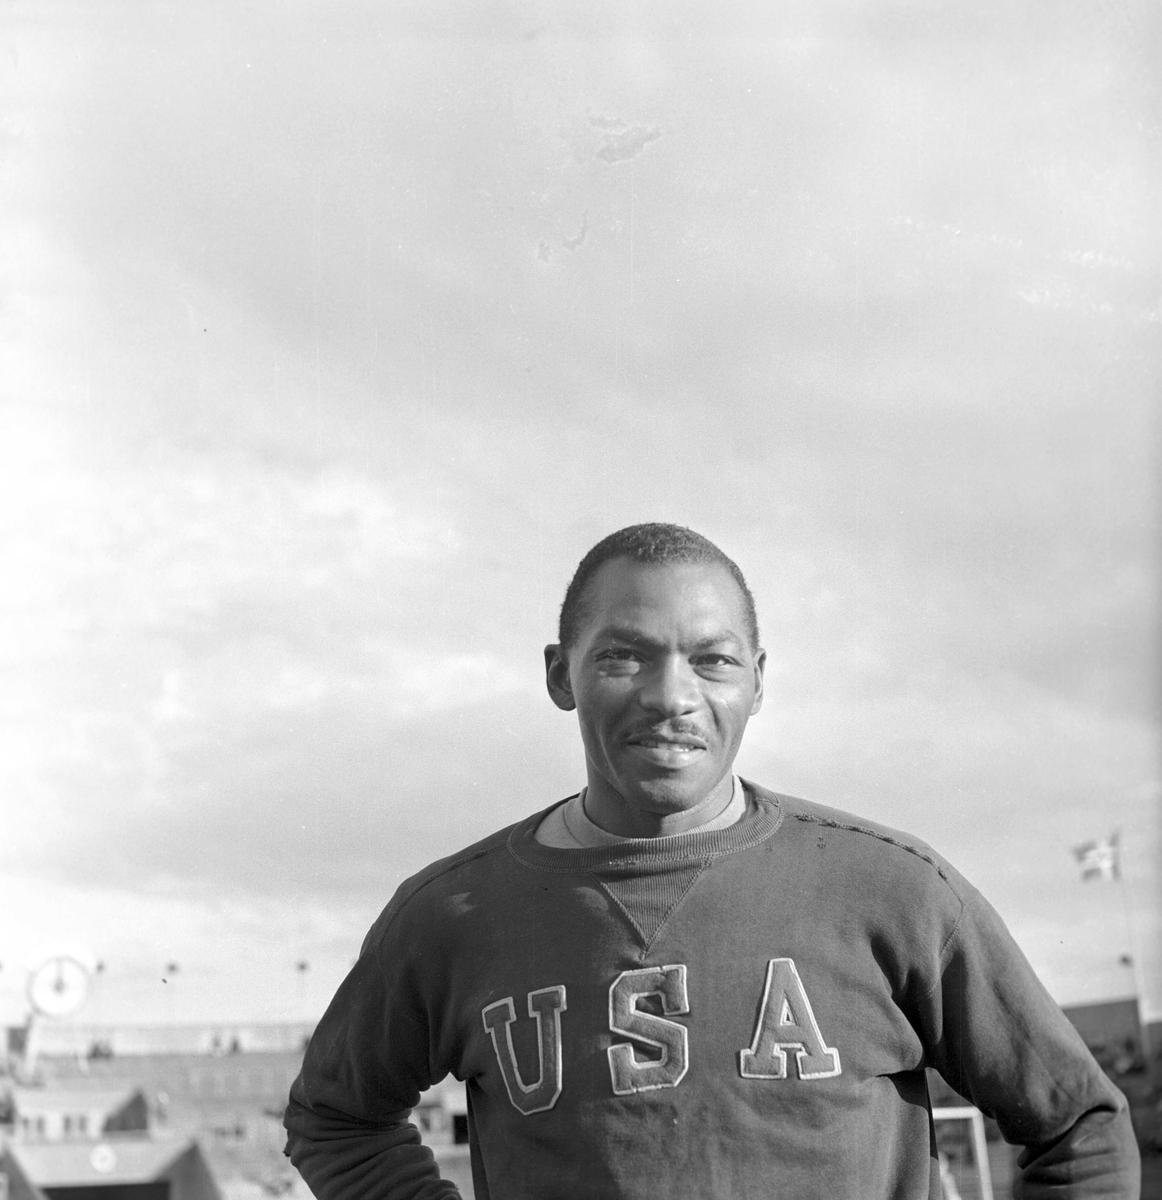 Serie. Sport. Friidrett. Norge-USA.
Fotografert 1947. 
